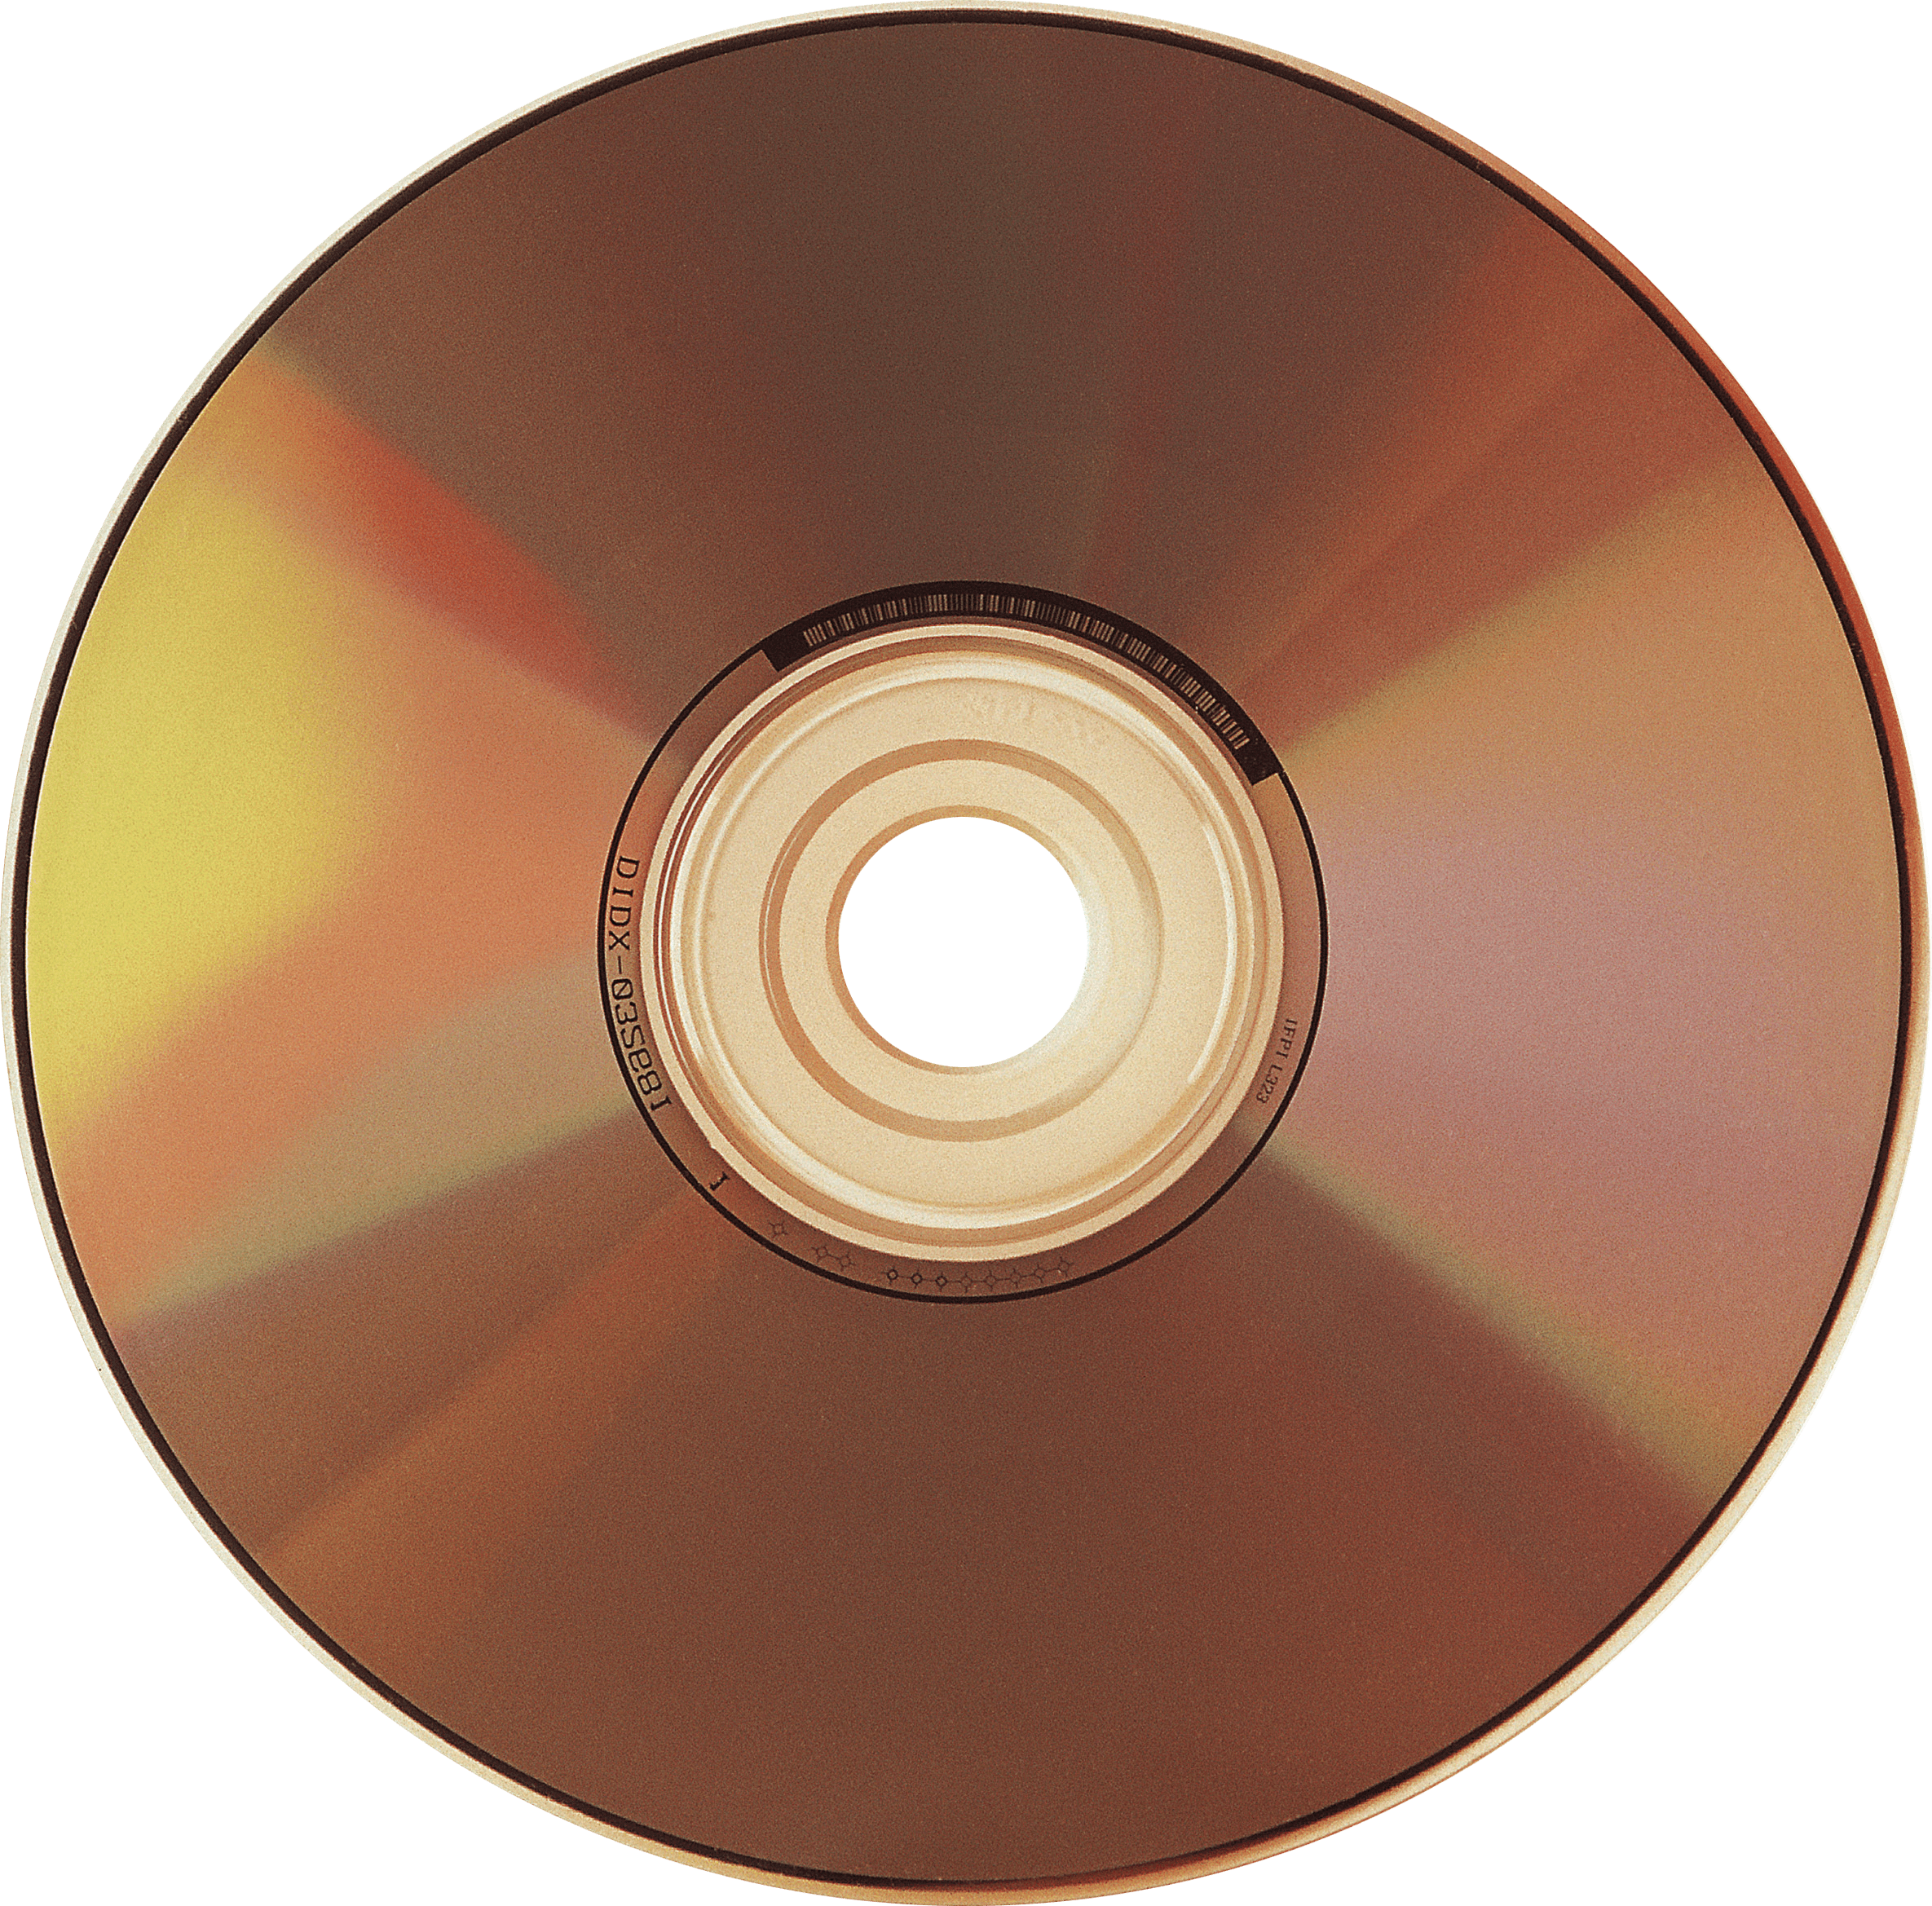 CD - Compact Disk (компакт диск). CD (Compact Disc) — оптический носитель. CD-R DVD. CD-R (Compact Disk Recorder).